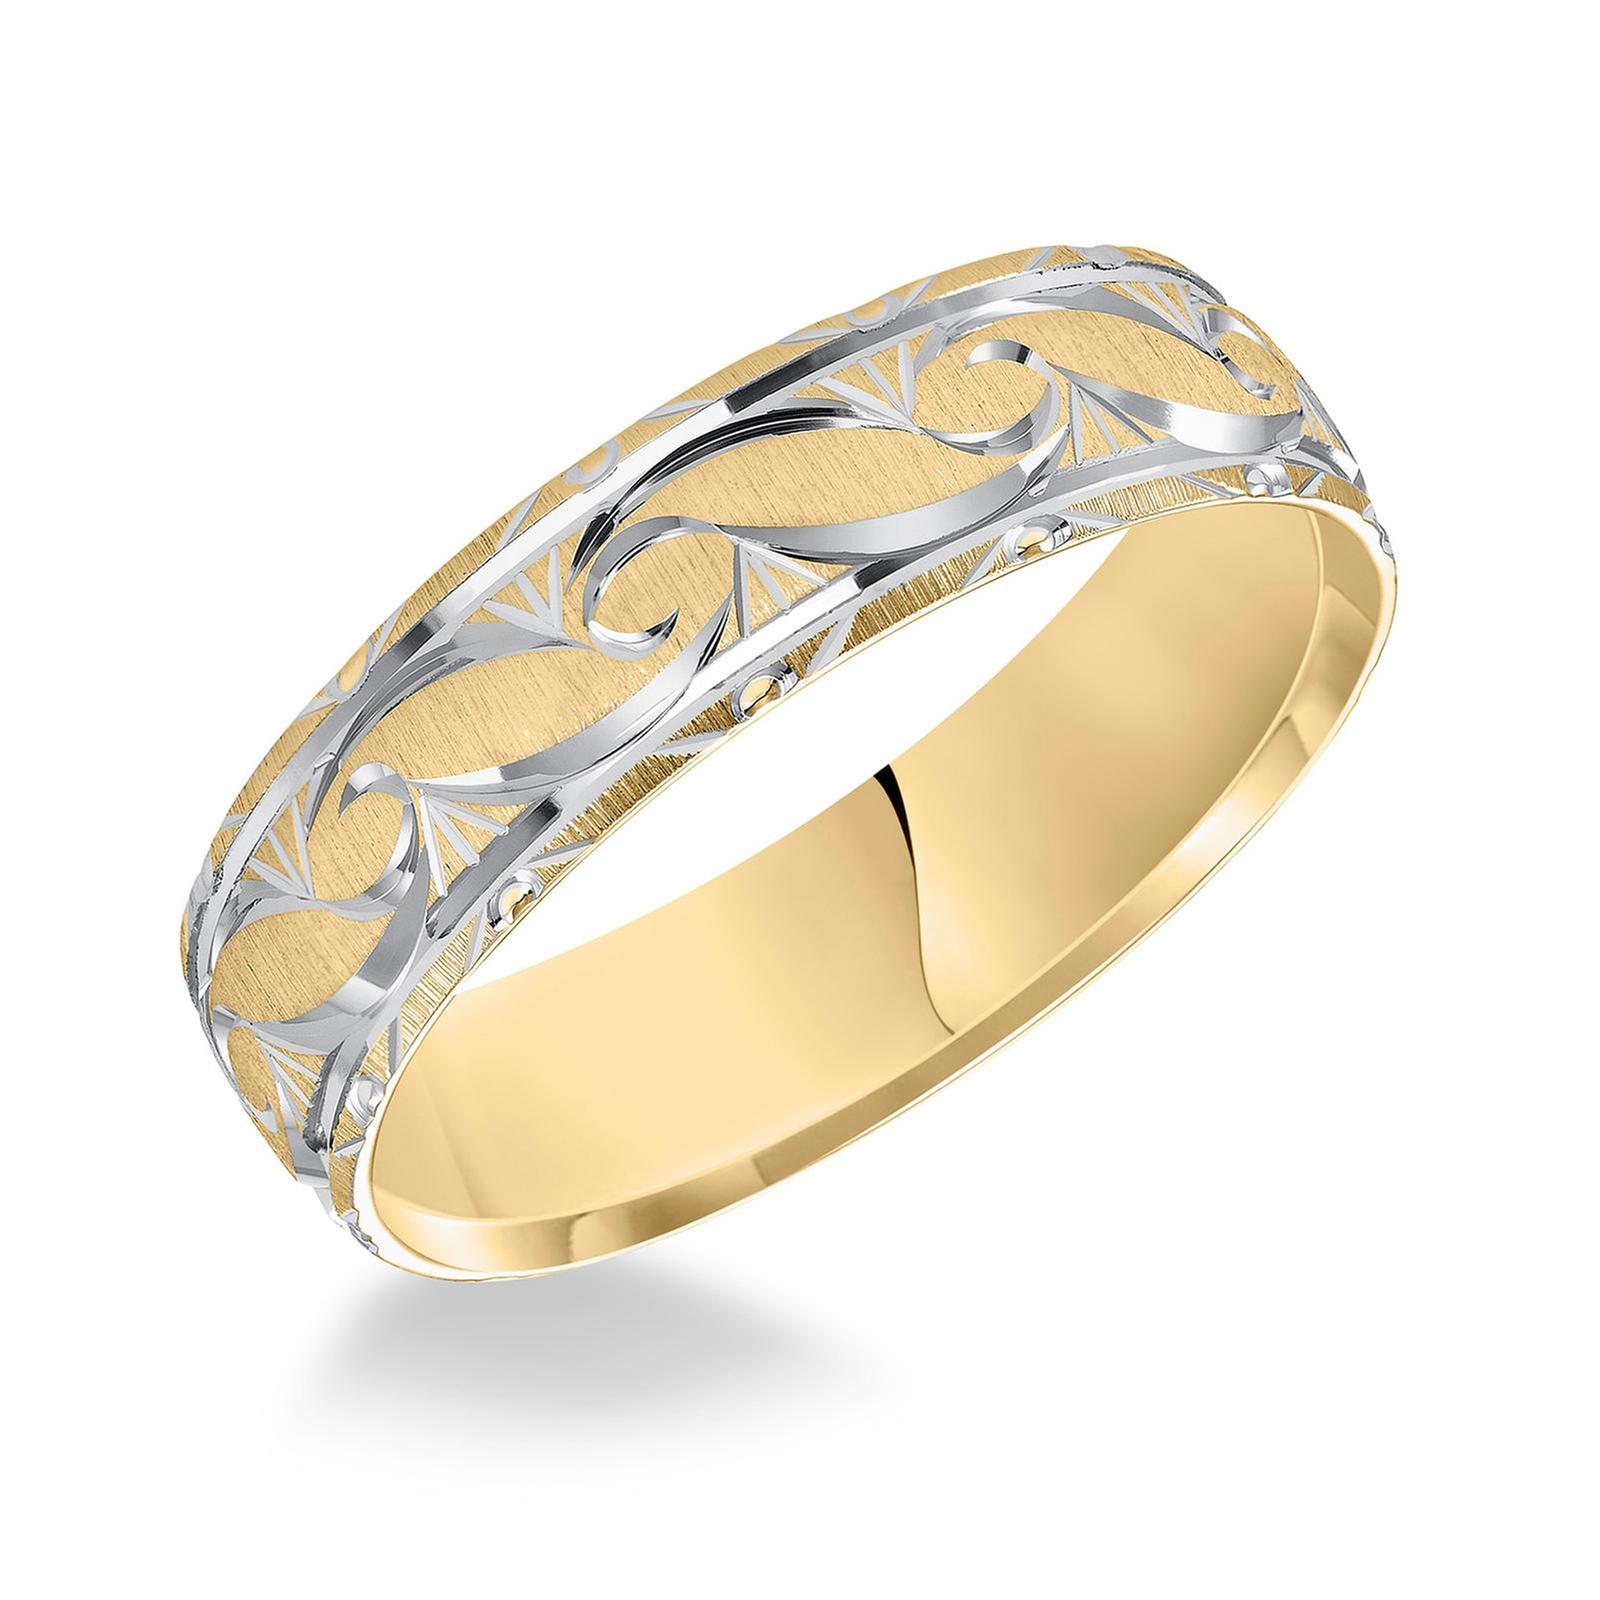 14K Two Tone Yellow White Gold 6mm Diamond Cut Satin Wedding Band Ring 